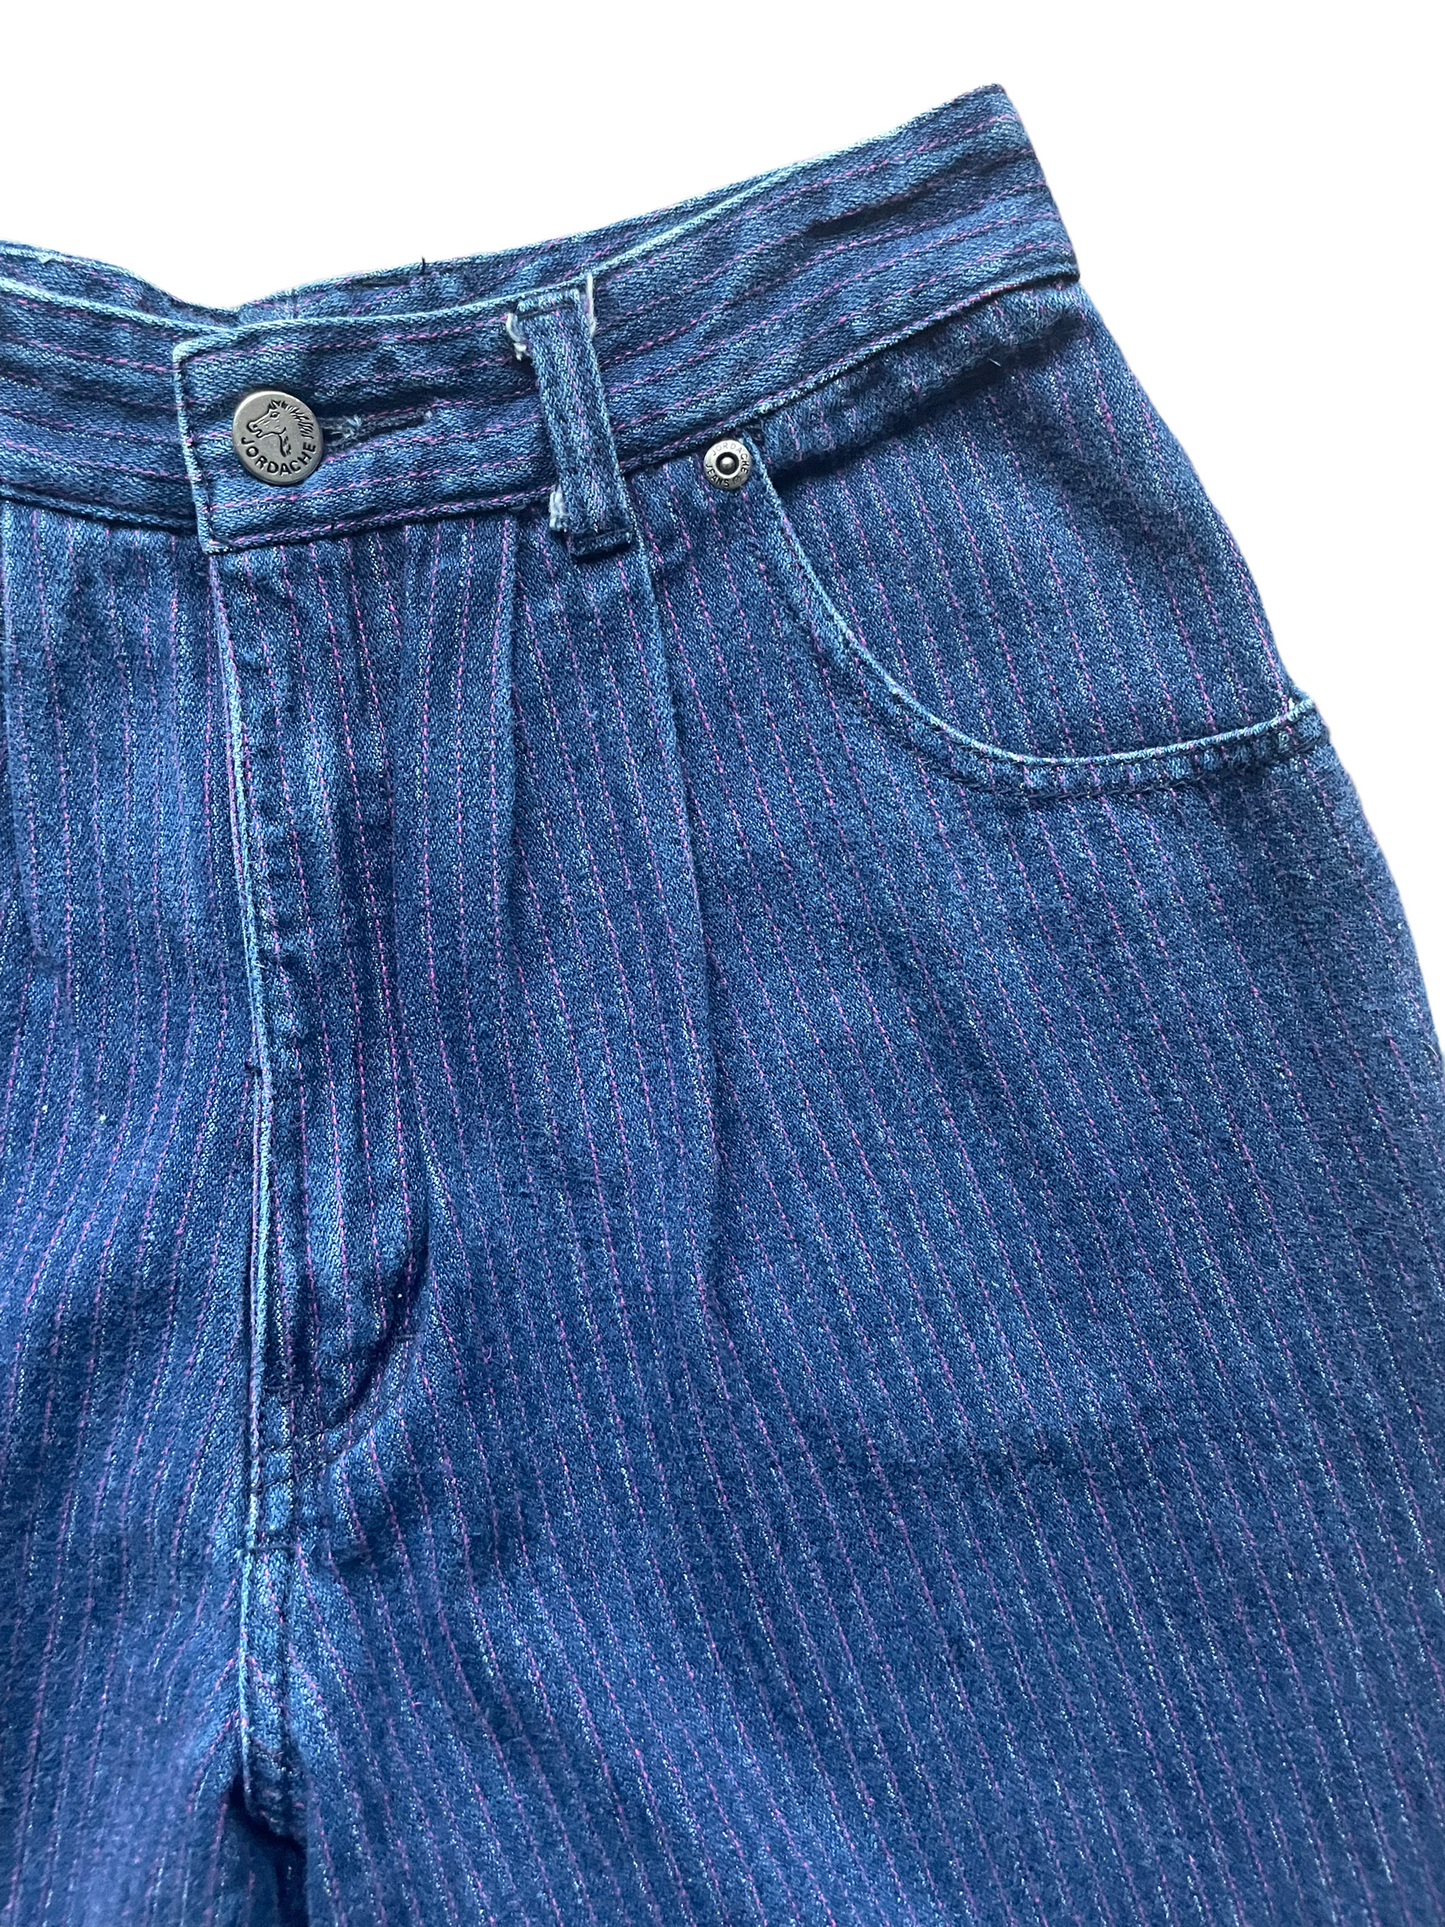 Left front waist view of Vintage 1980s Ladies Purple Pinstripe Jordache Jeans | Barn Owl Seattle | Vintage Ladies Jeans and Denim